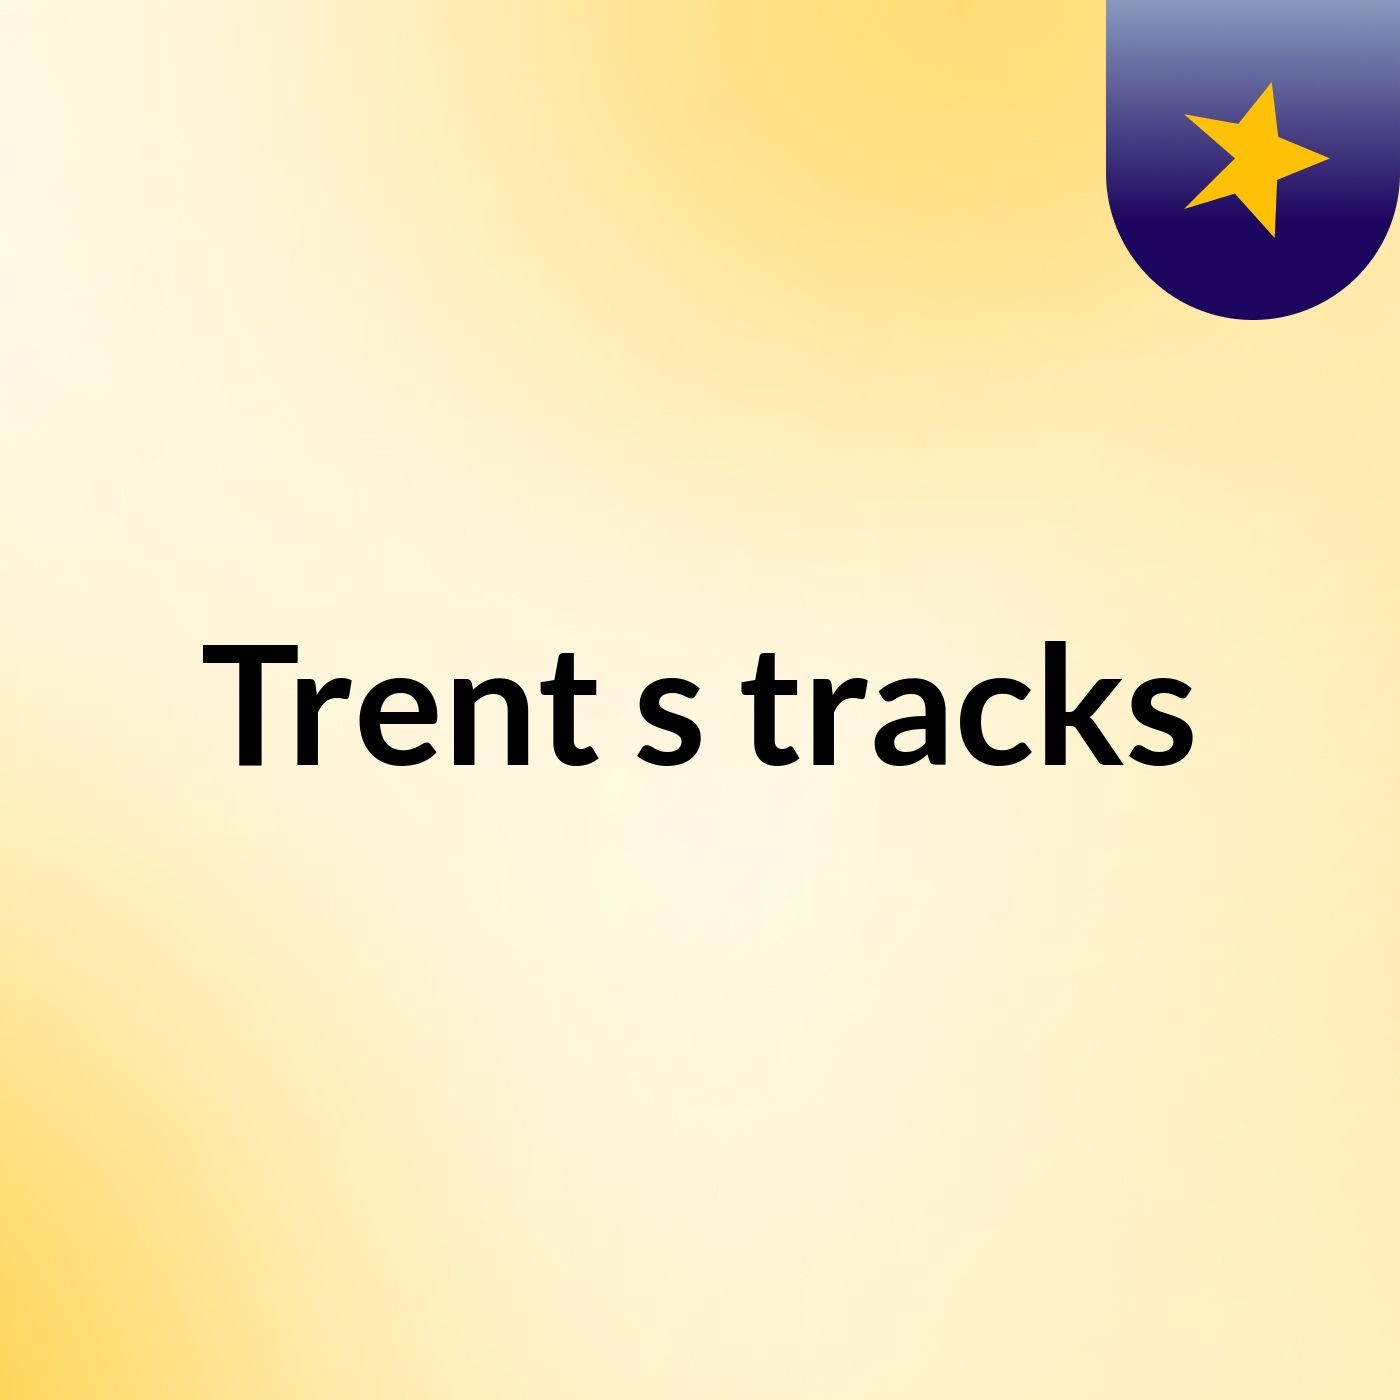 Trent's tracks